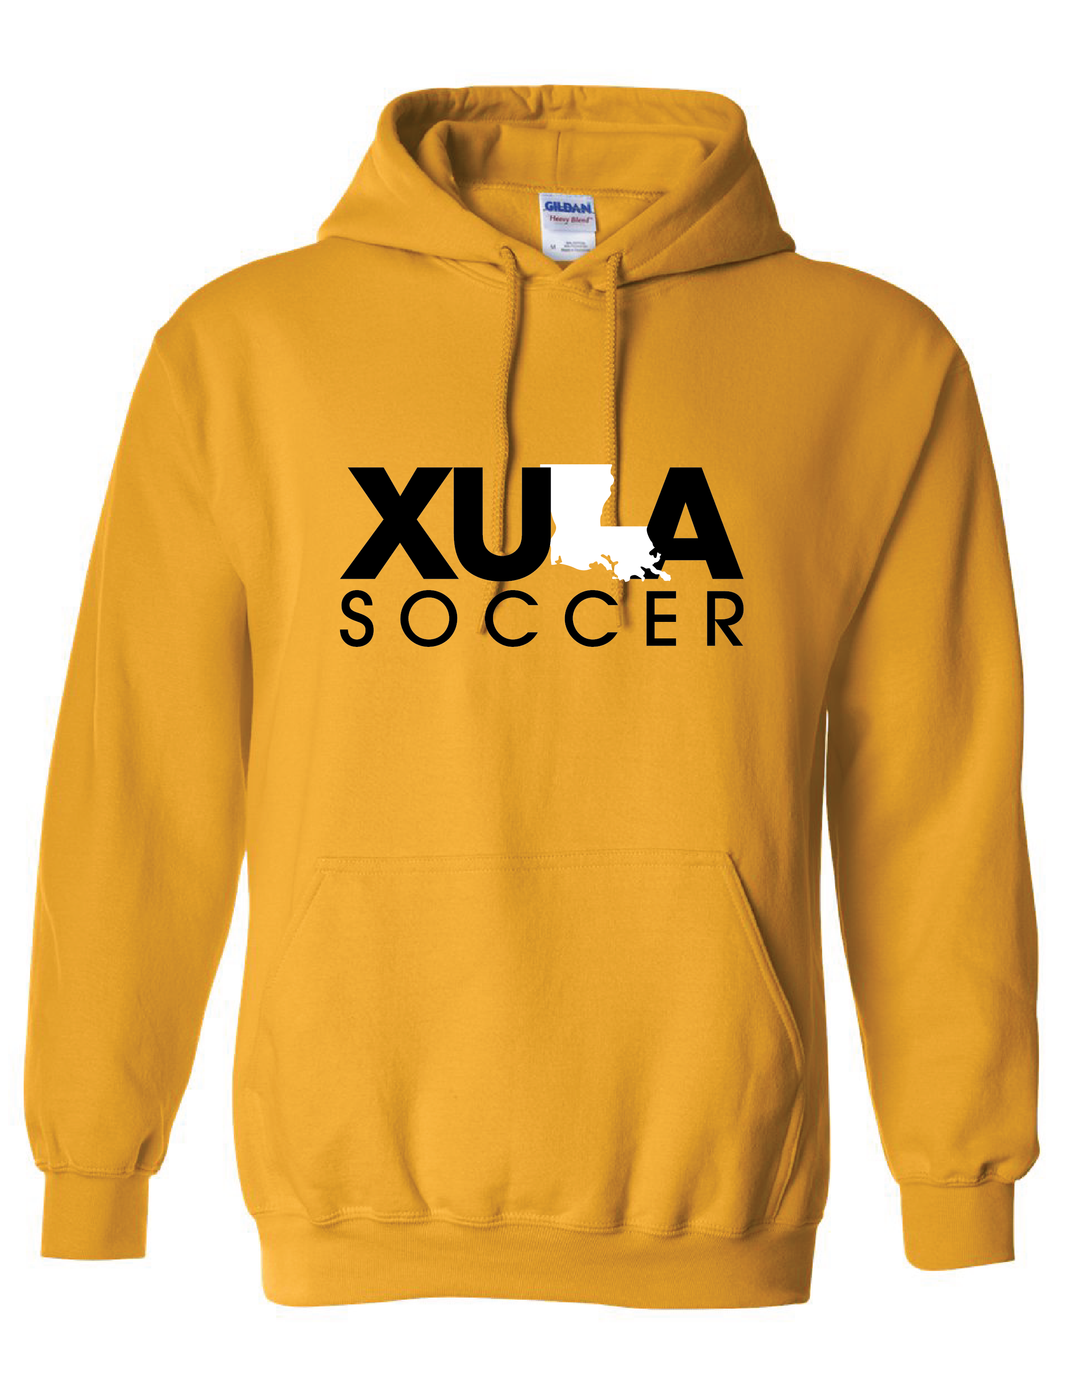 XULA Soccer Hoody Xavier University Gold Mens Small - Third Coast Soccer